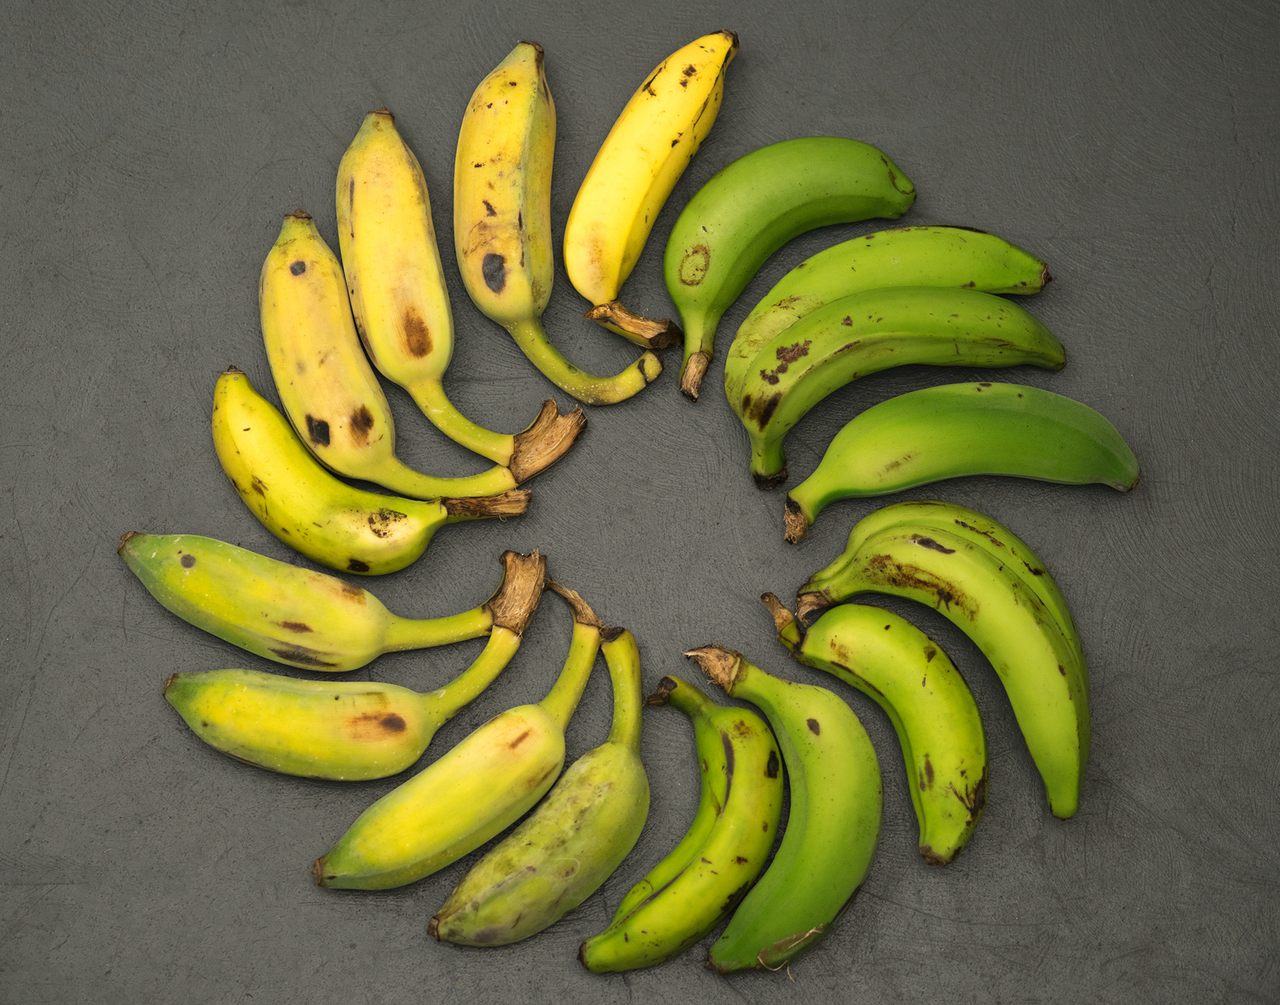 A selection of Gros Michel bananas, grown in Florida.